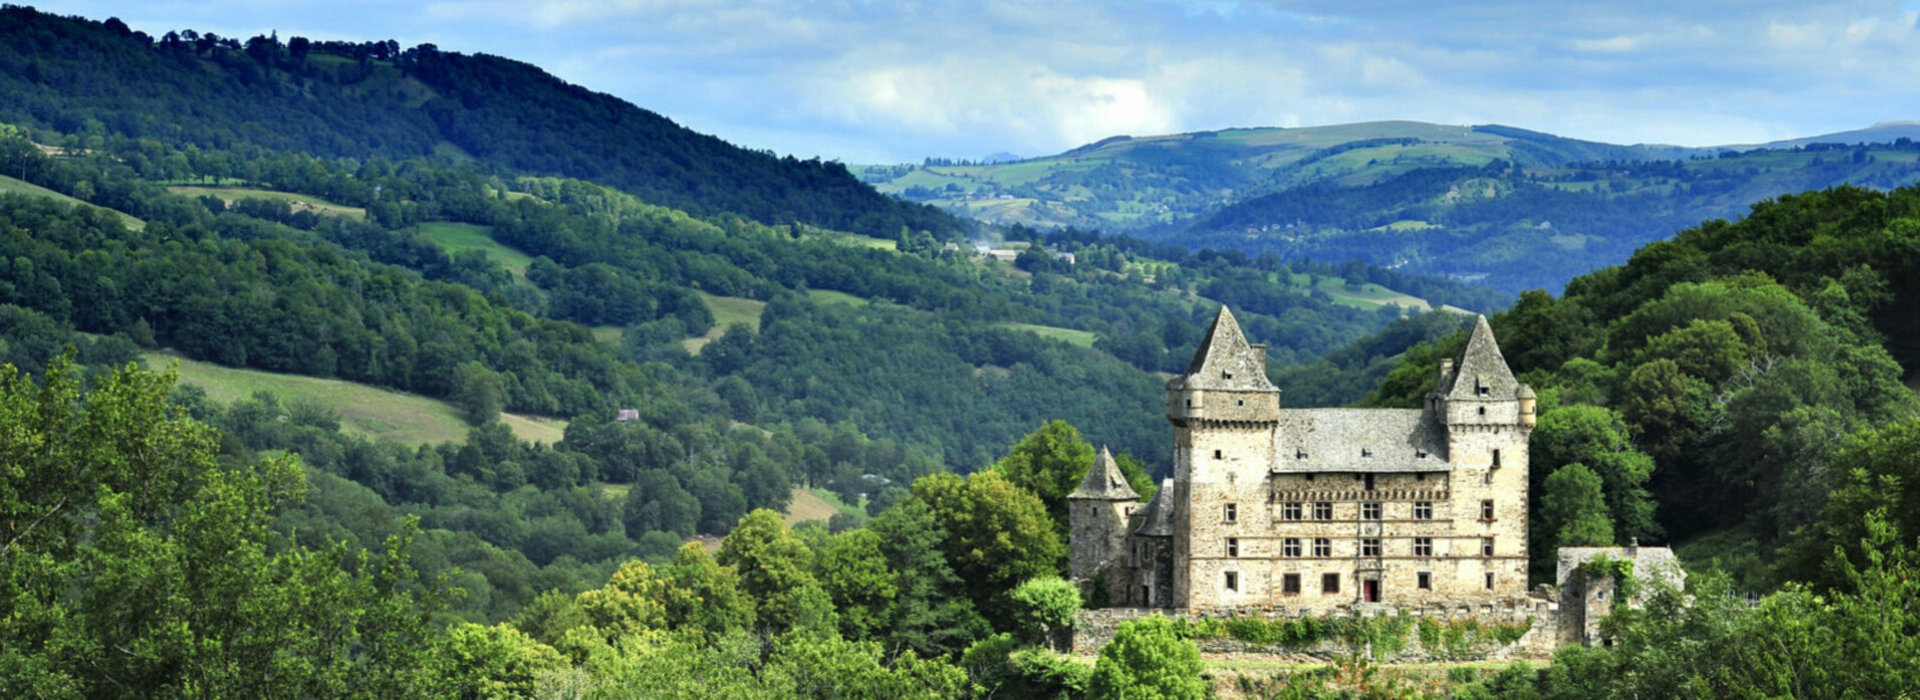 Château de Messilhac - Raulhac (Cantal)